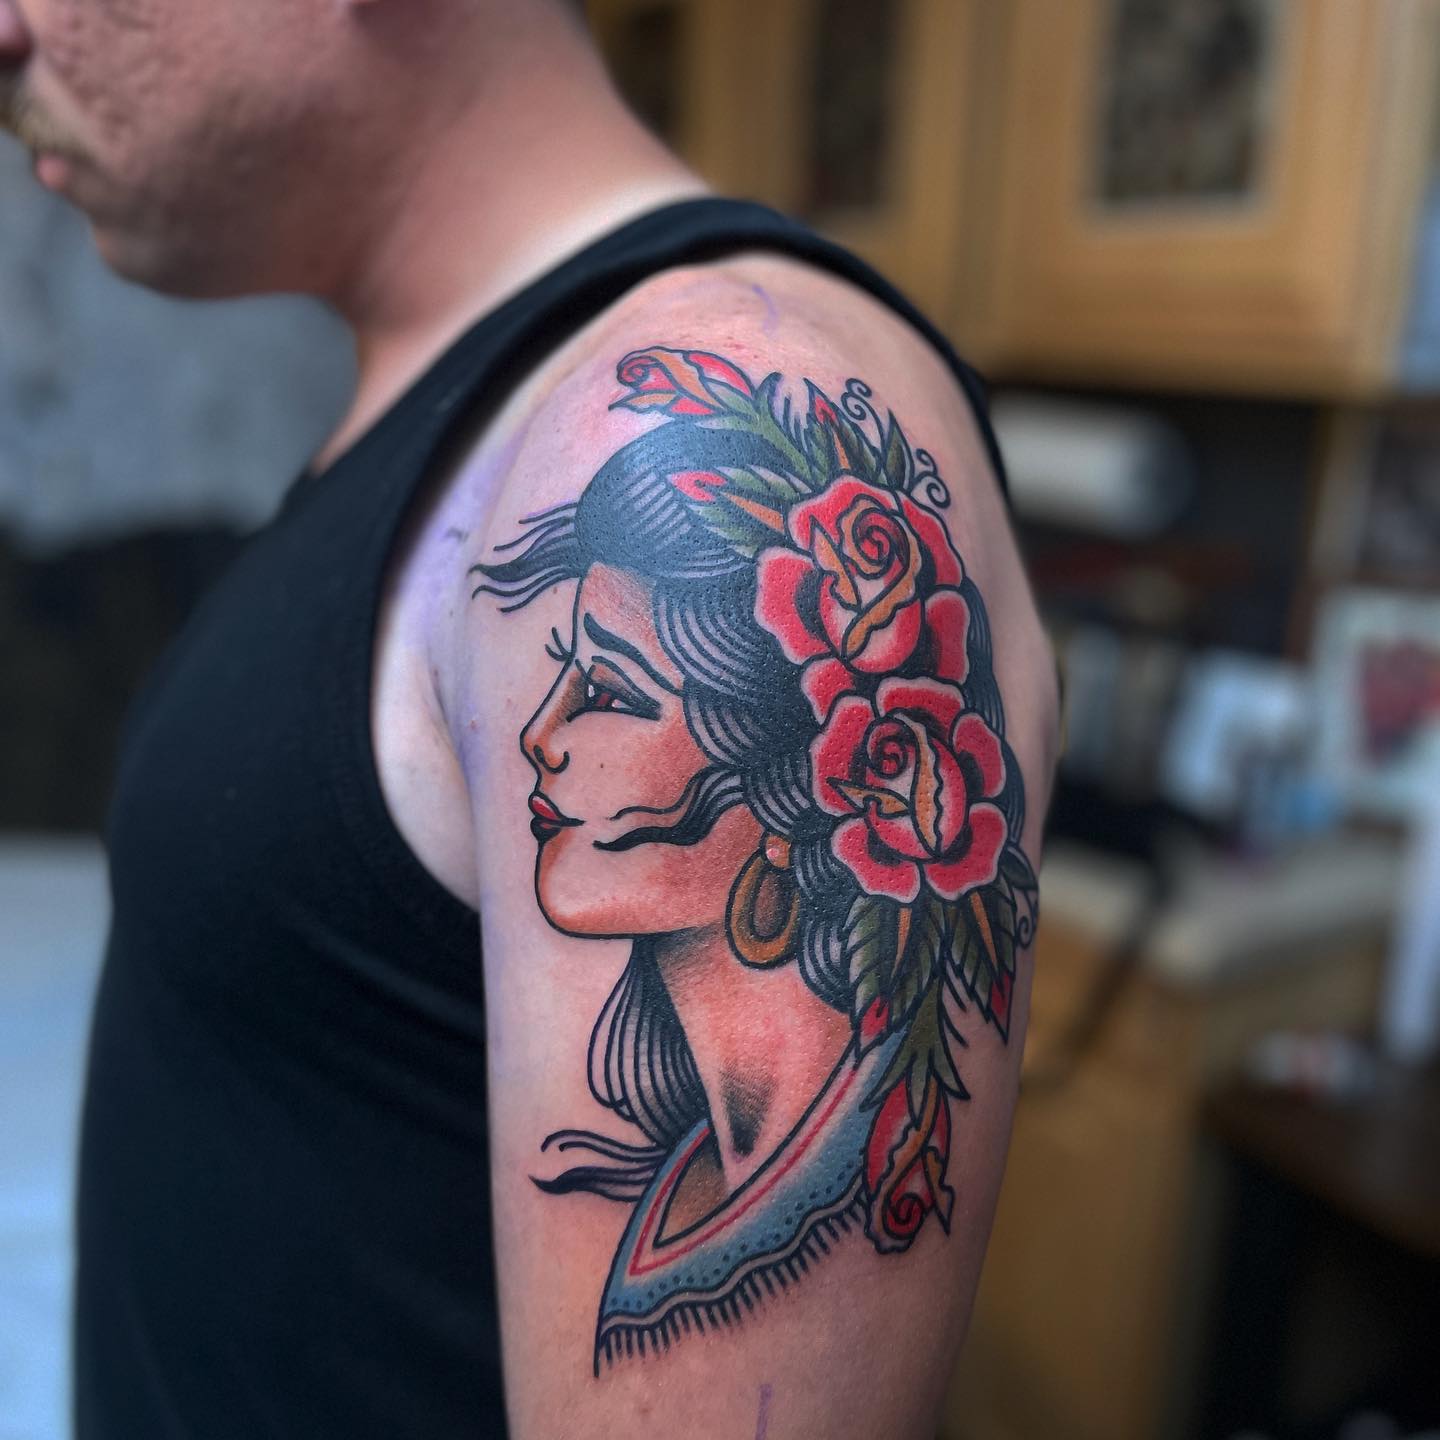 Tatuaje tradicional americano de una chica gitana en el hombro